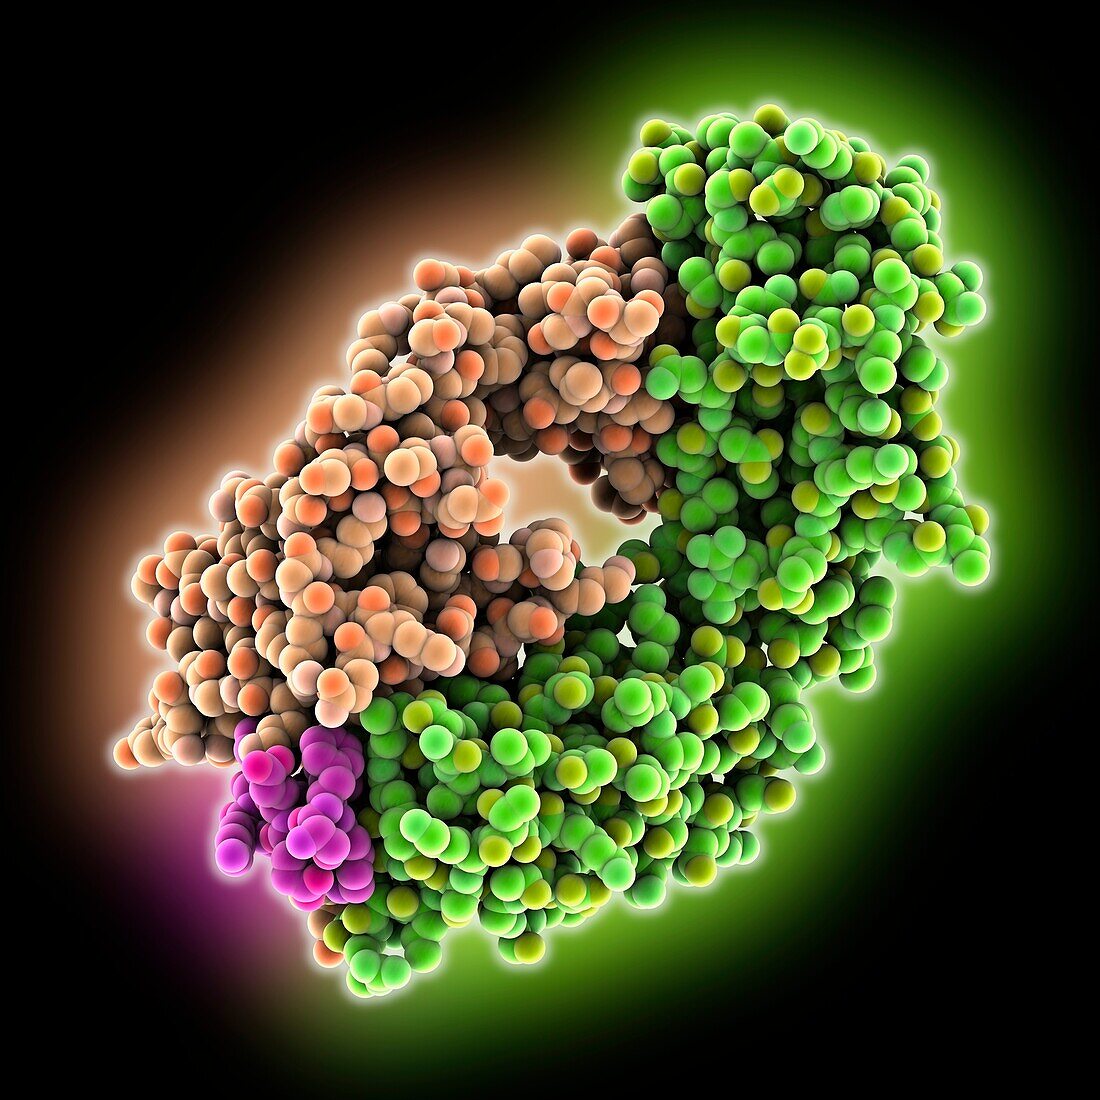 SARS-CoV-2 glycoprotein with antibody, molecular model